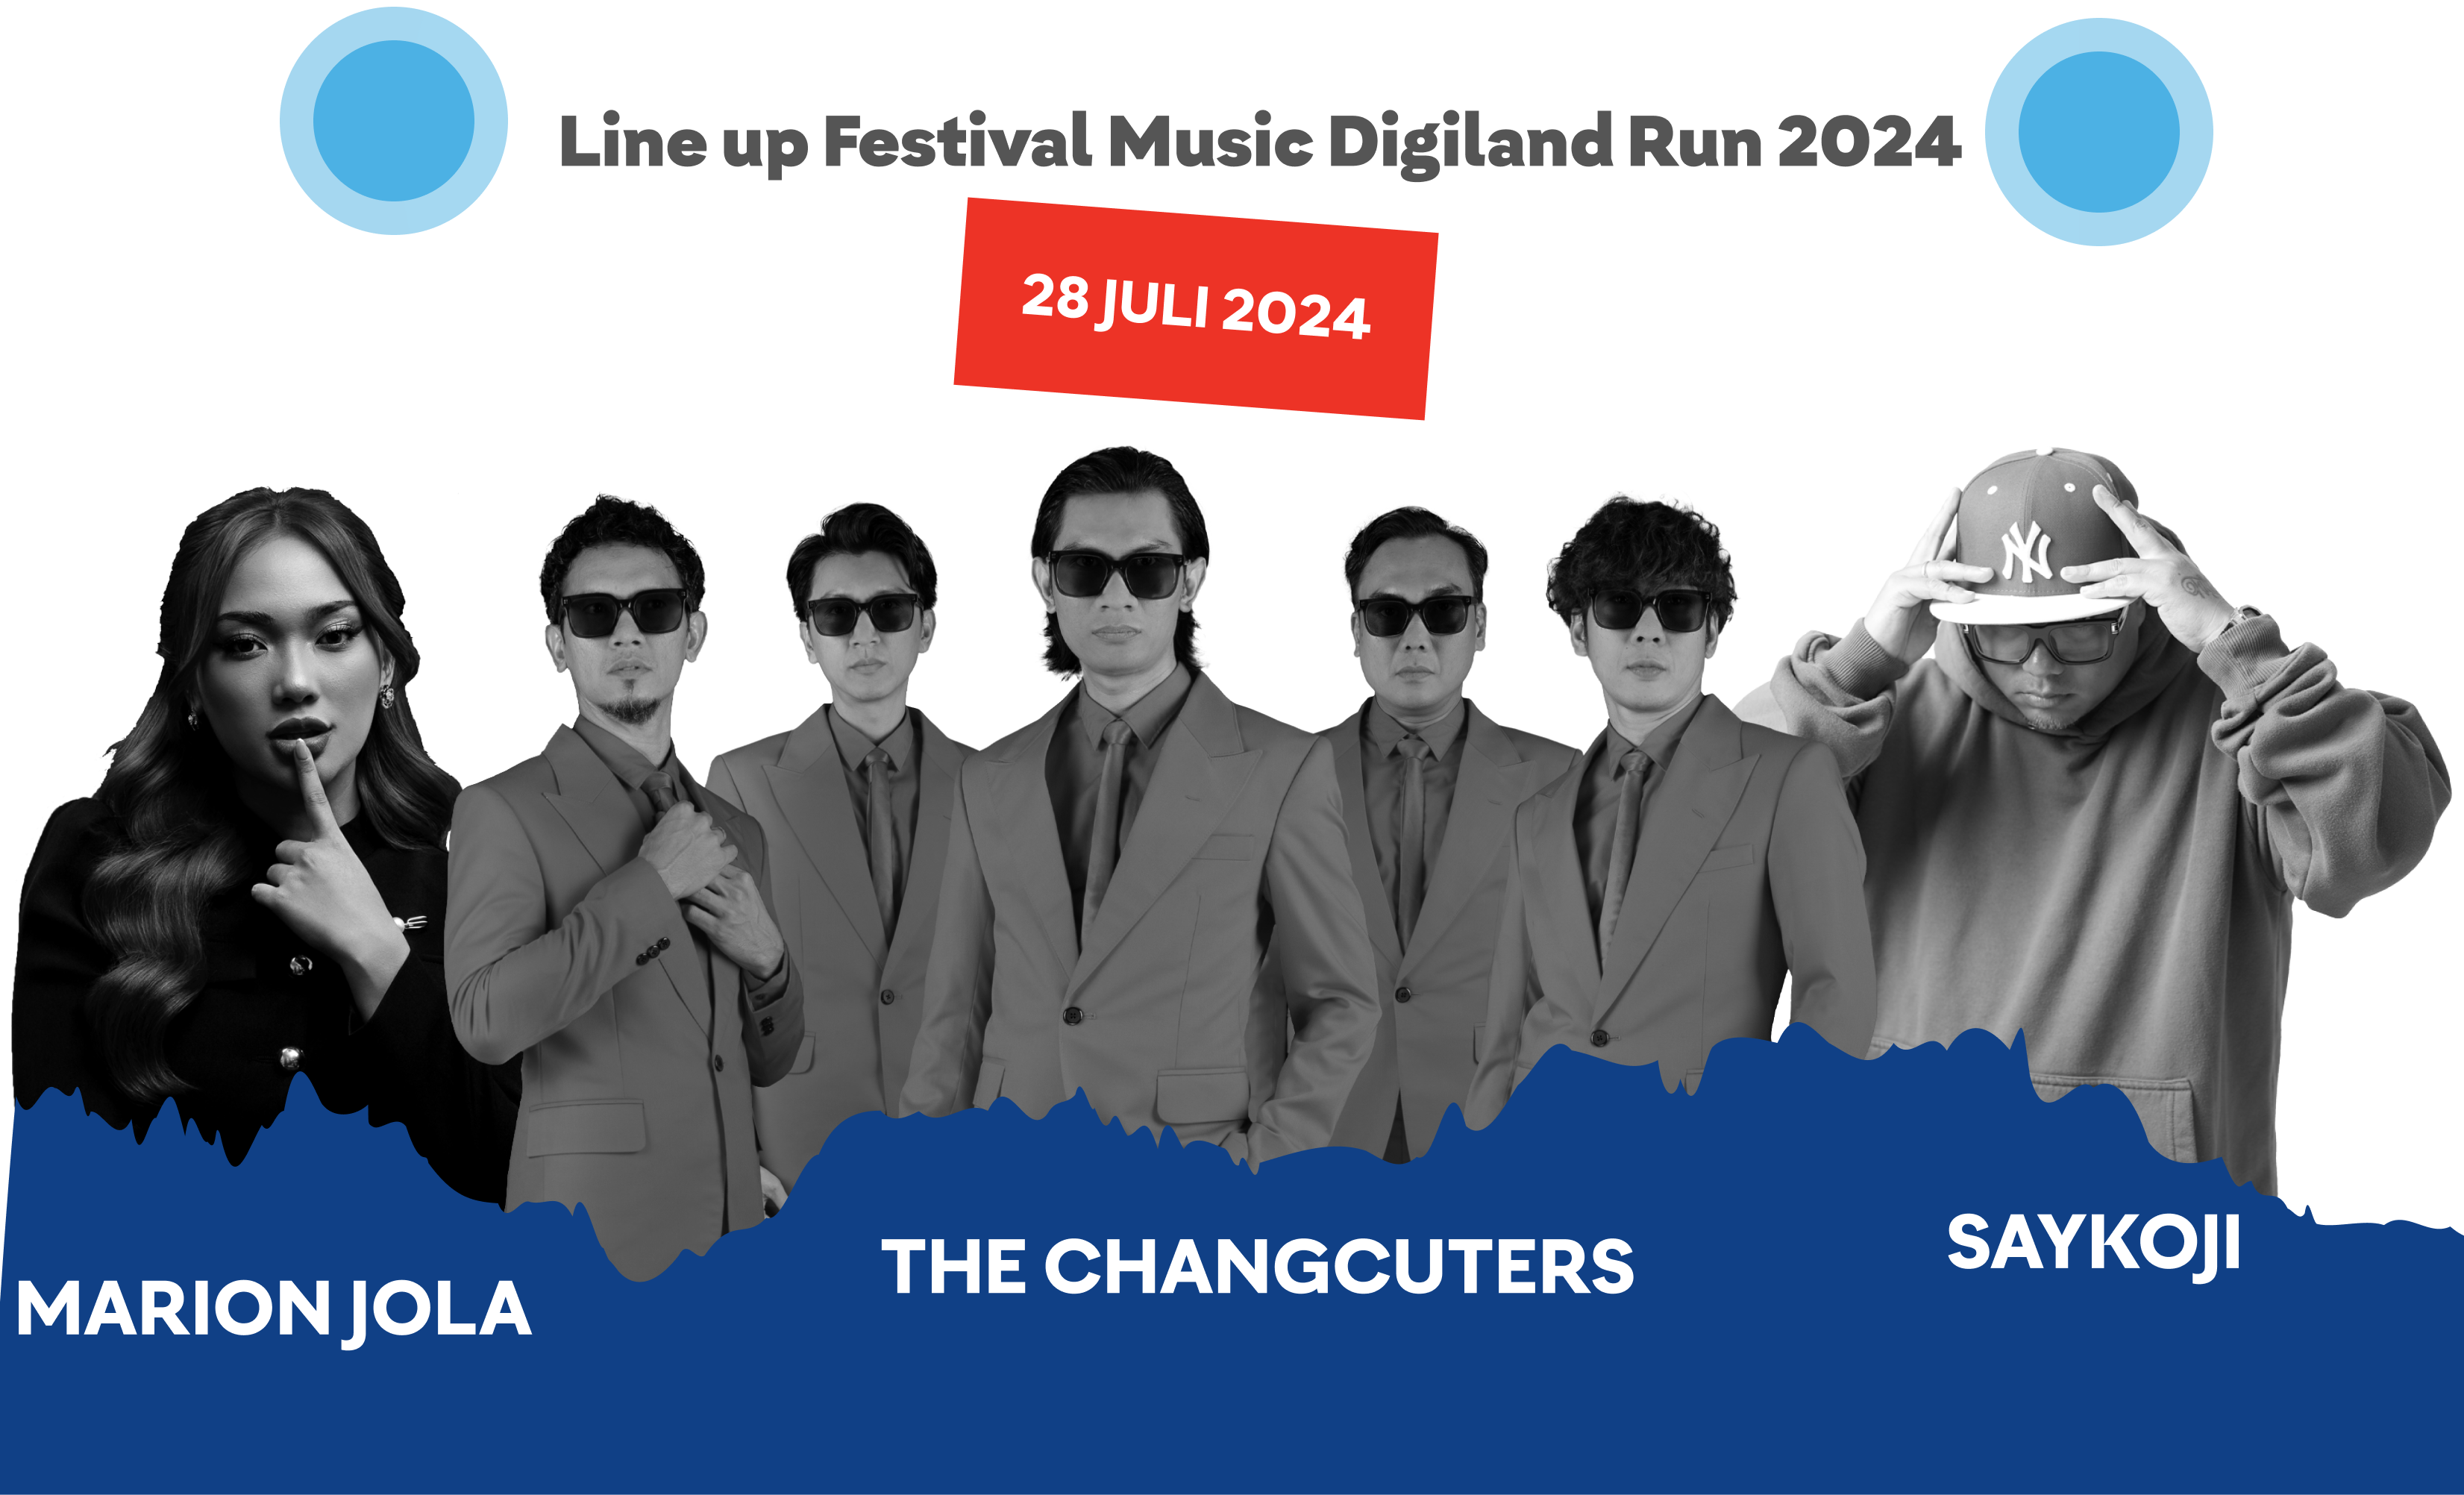 Line up Festival Music Digiland Run 2024